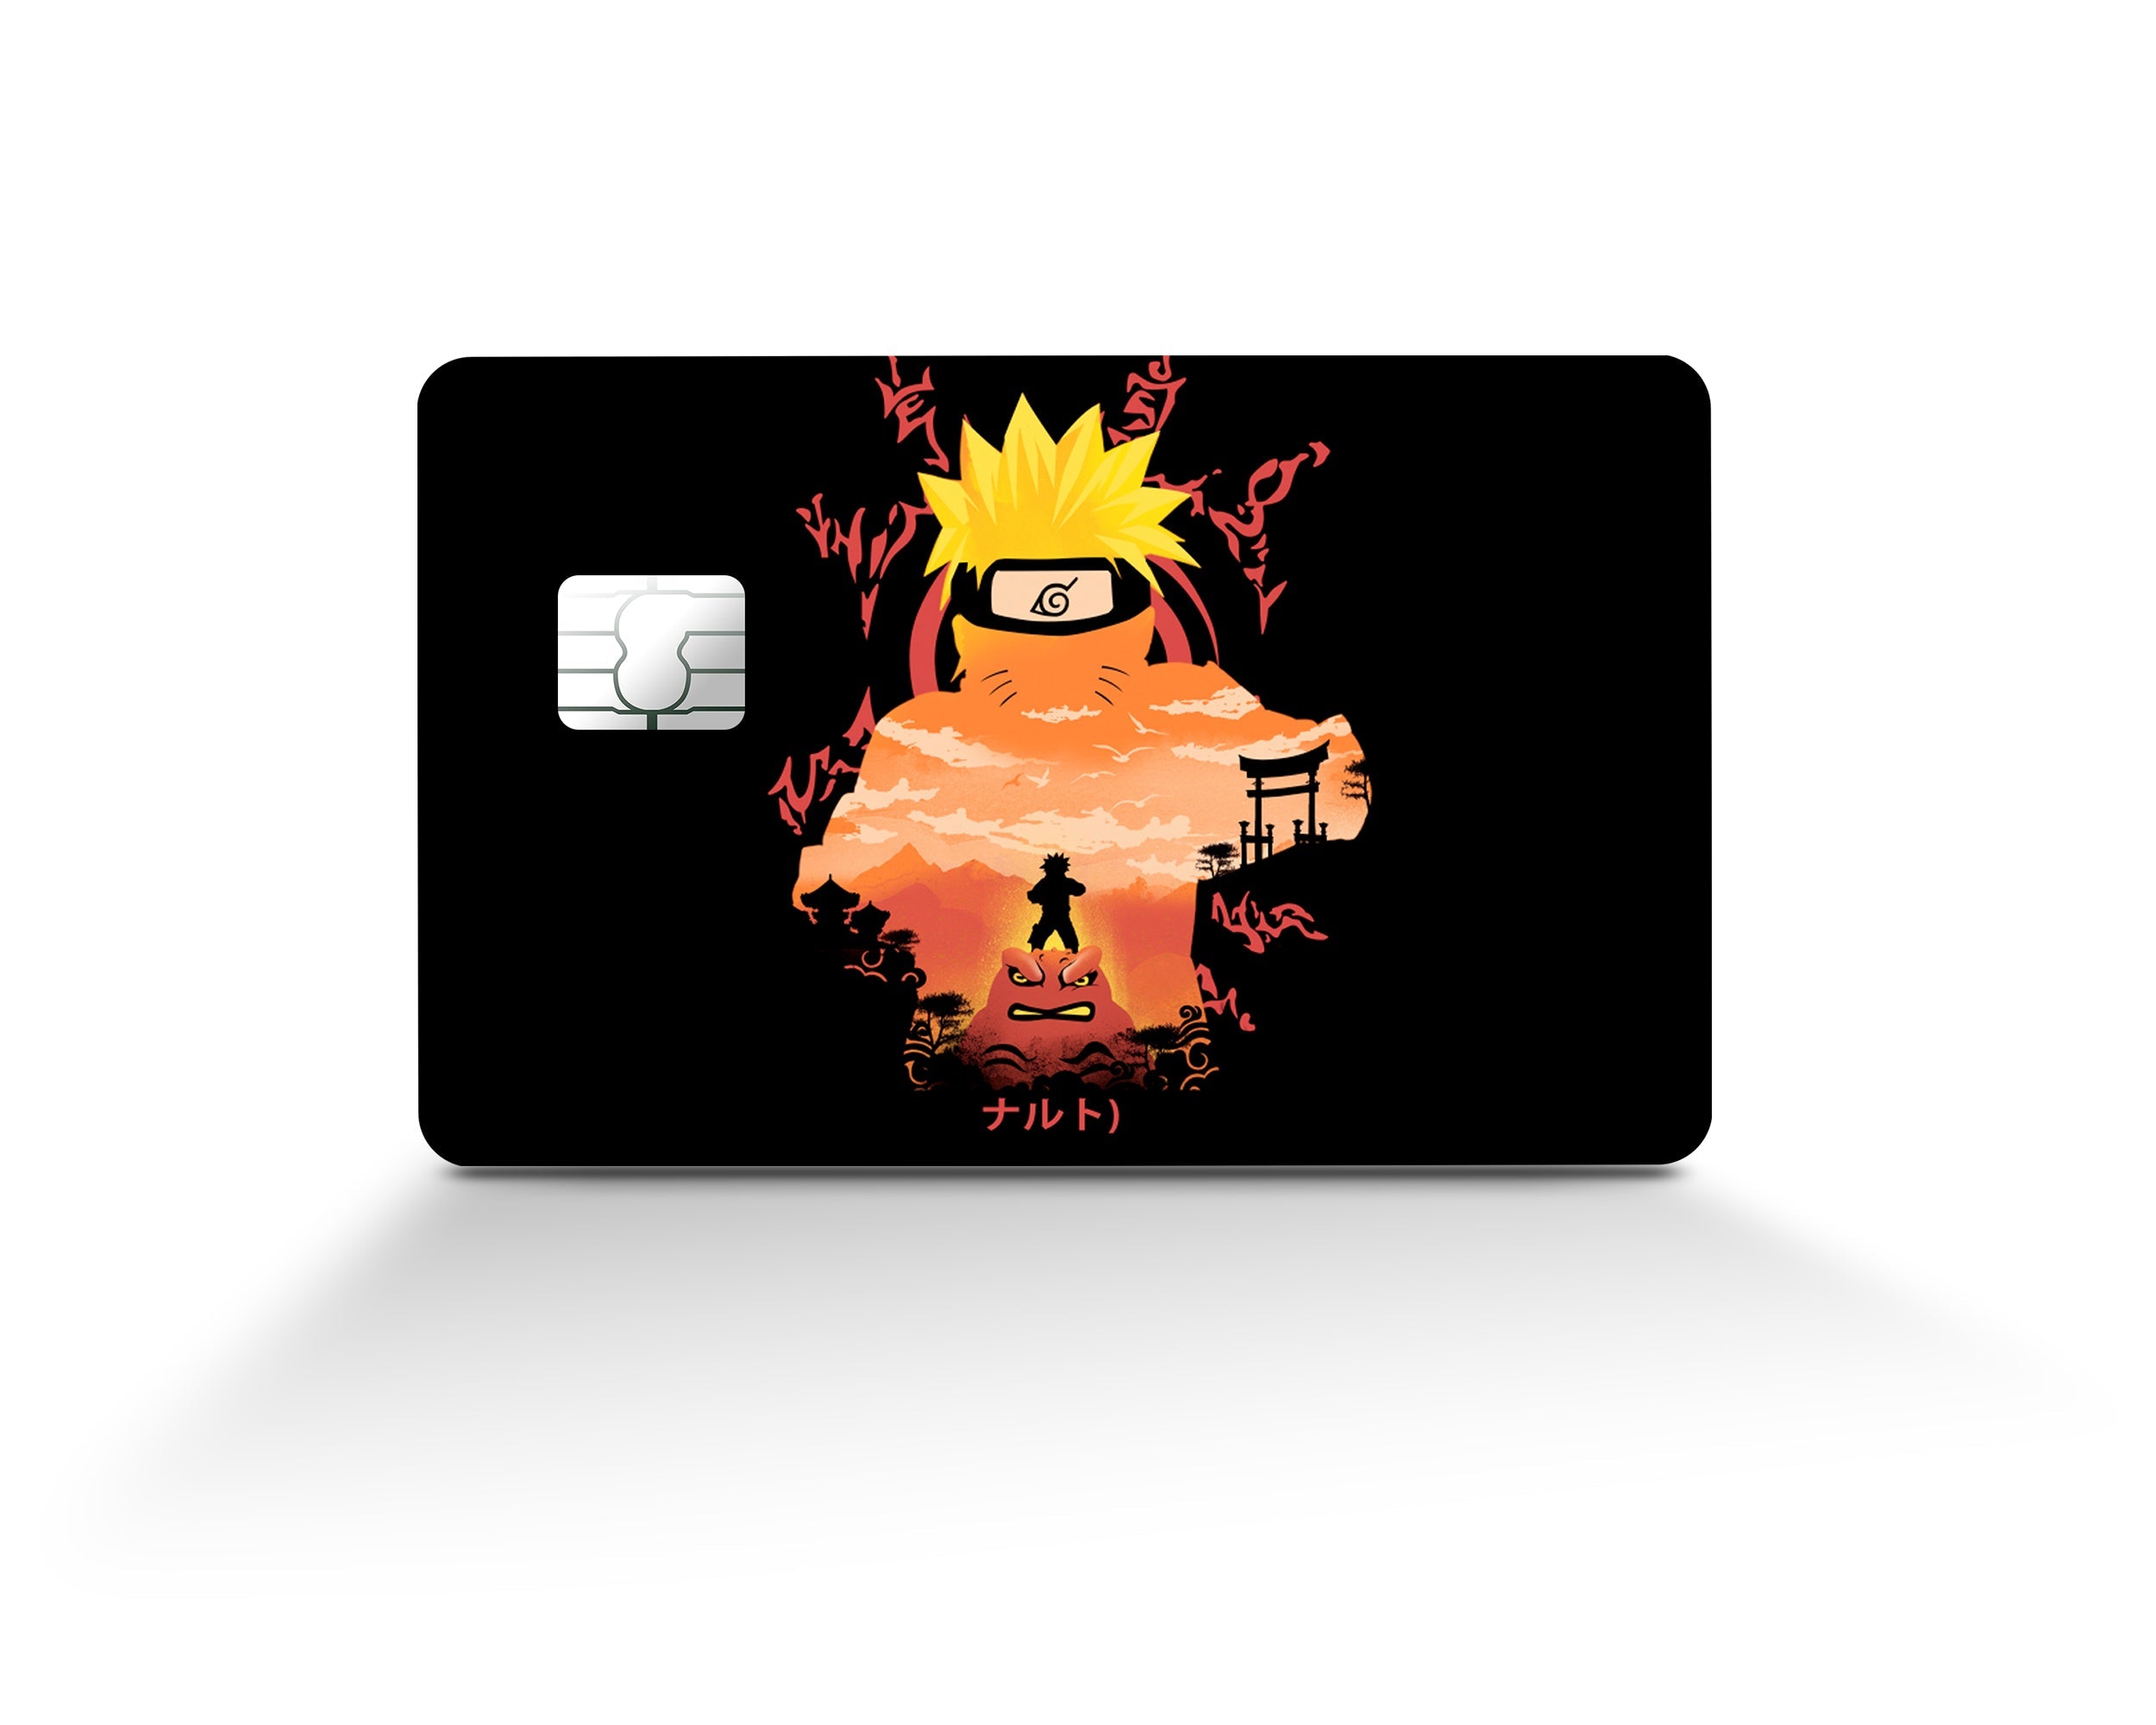 Kakashi Lightning Credit Card Credit Card Skin  Anime Town Creations